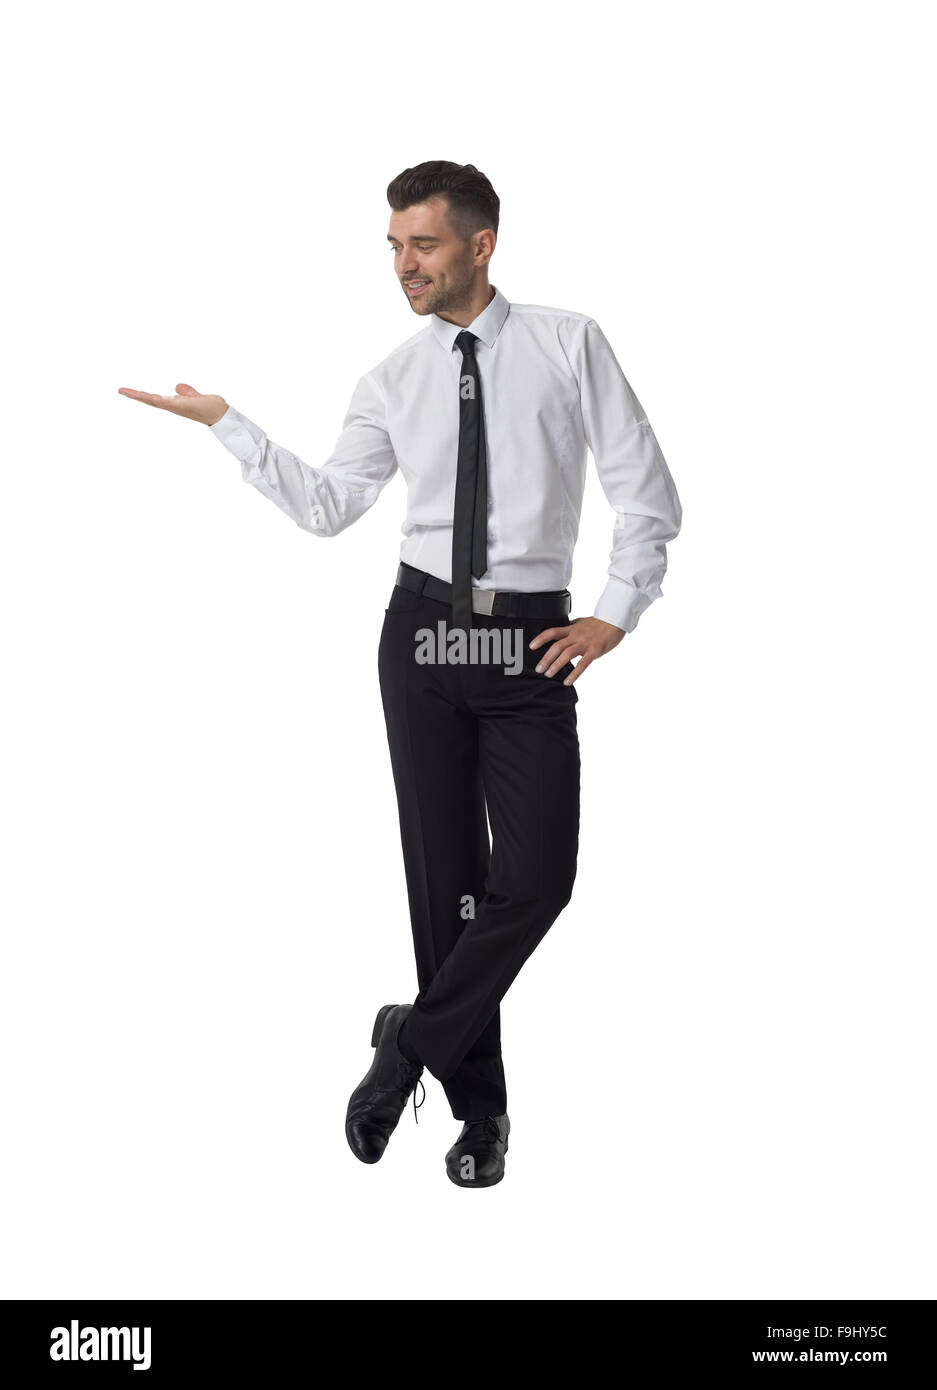 Businessman presenting something Full Length Portrait isolated on White Background Stock Photo